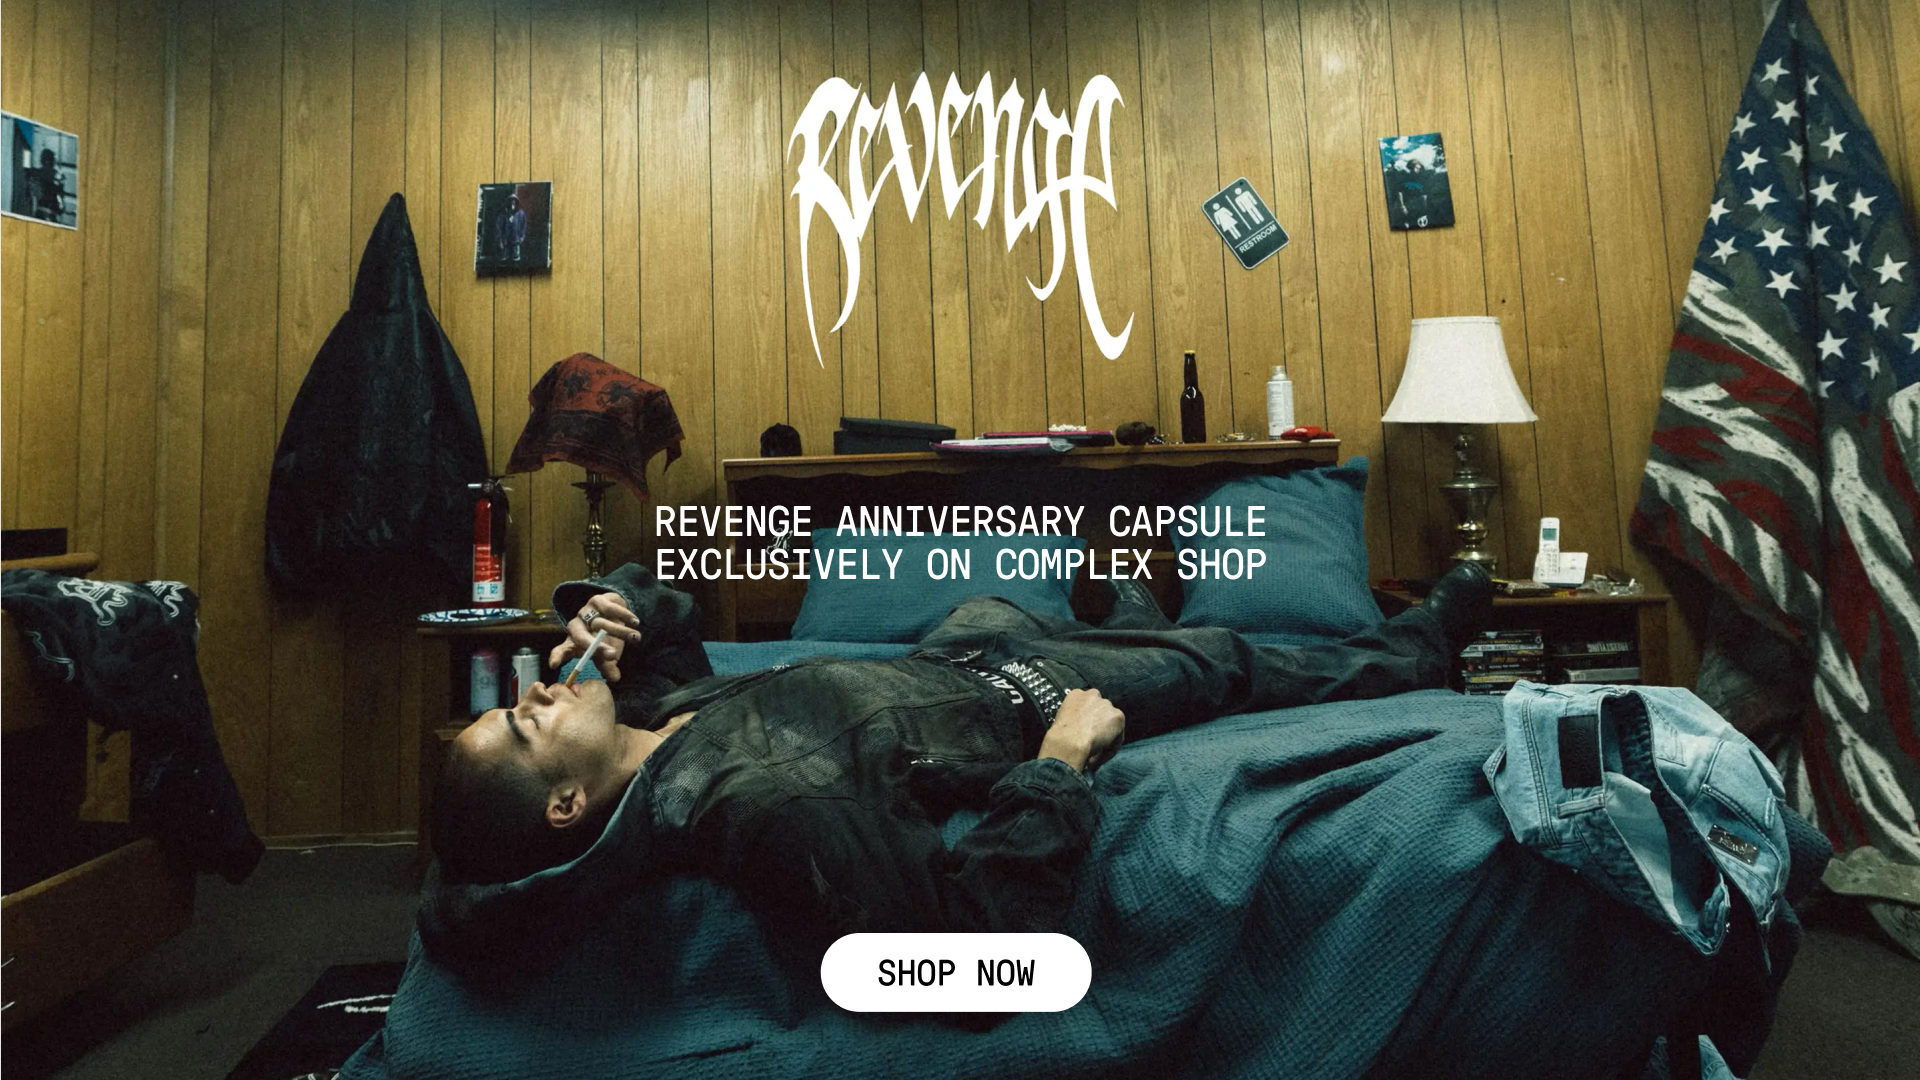 The Revenge Anniversary Capsule. Shop Now.